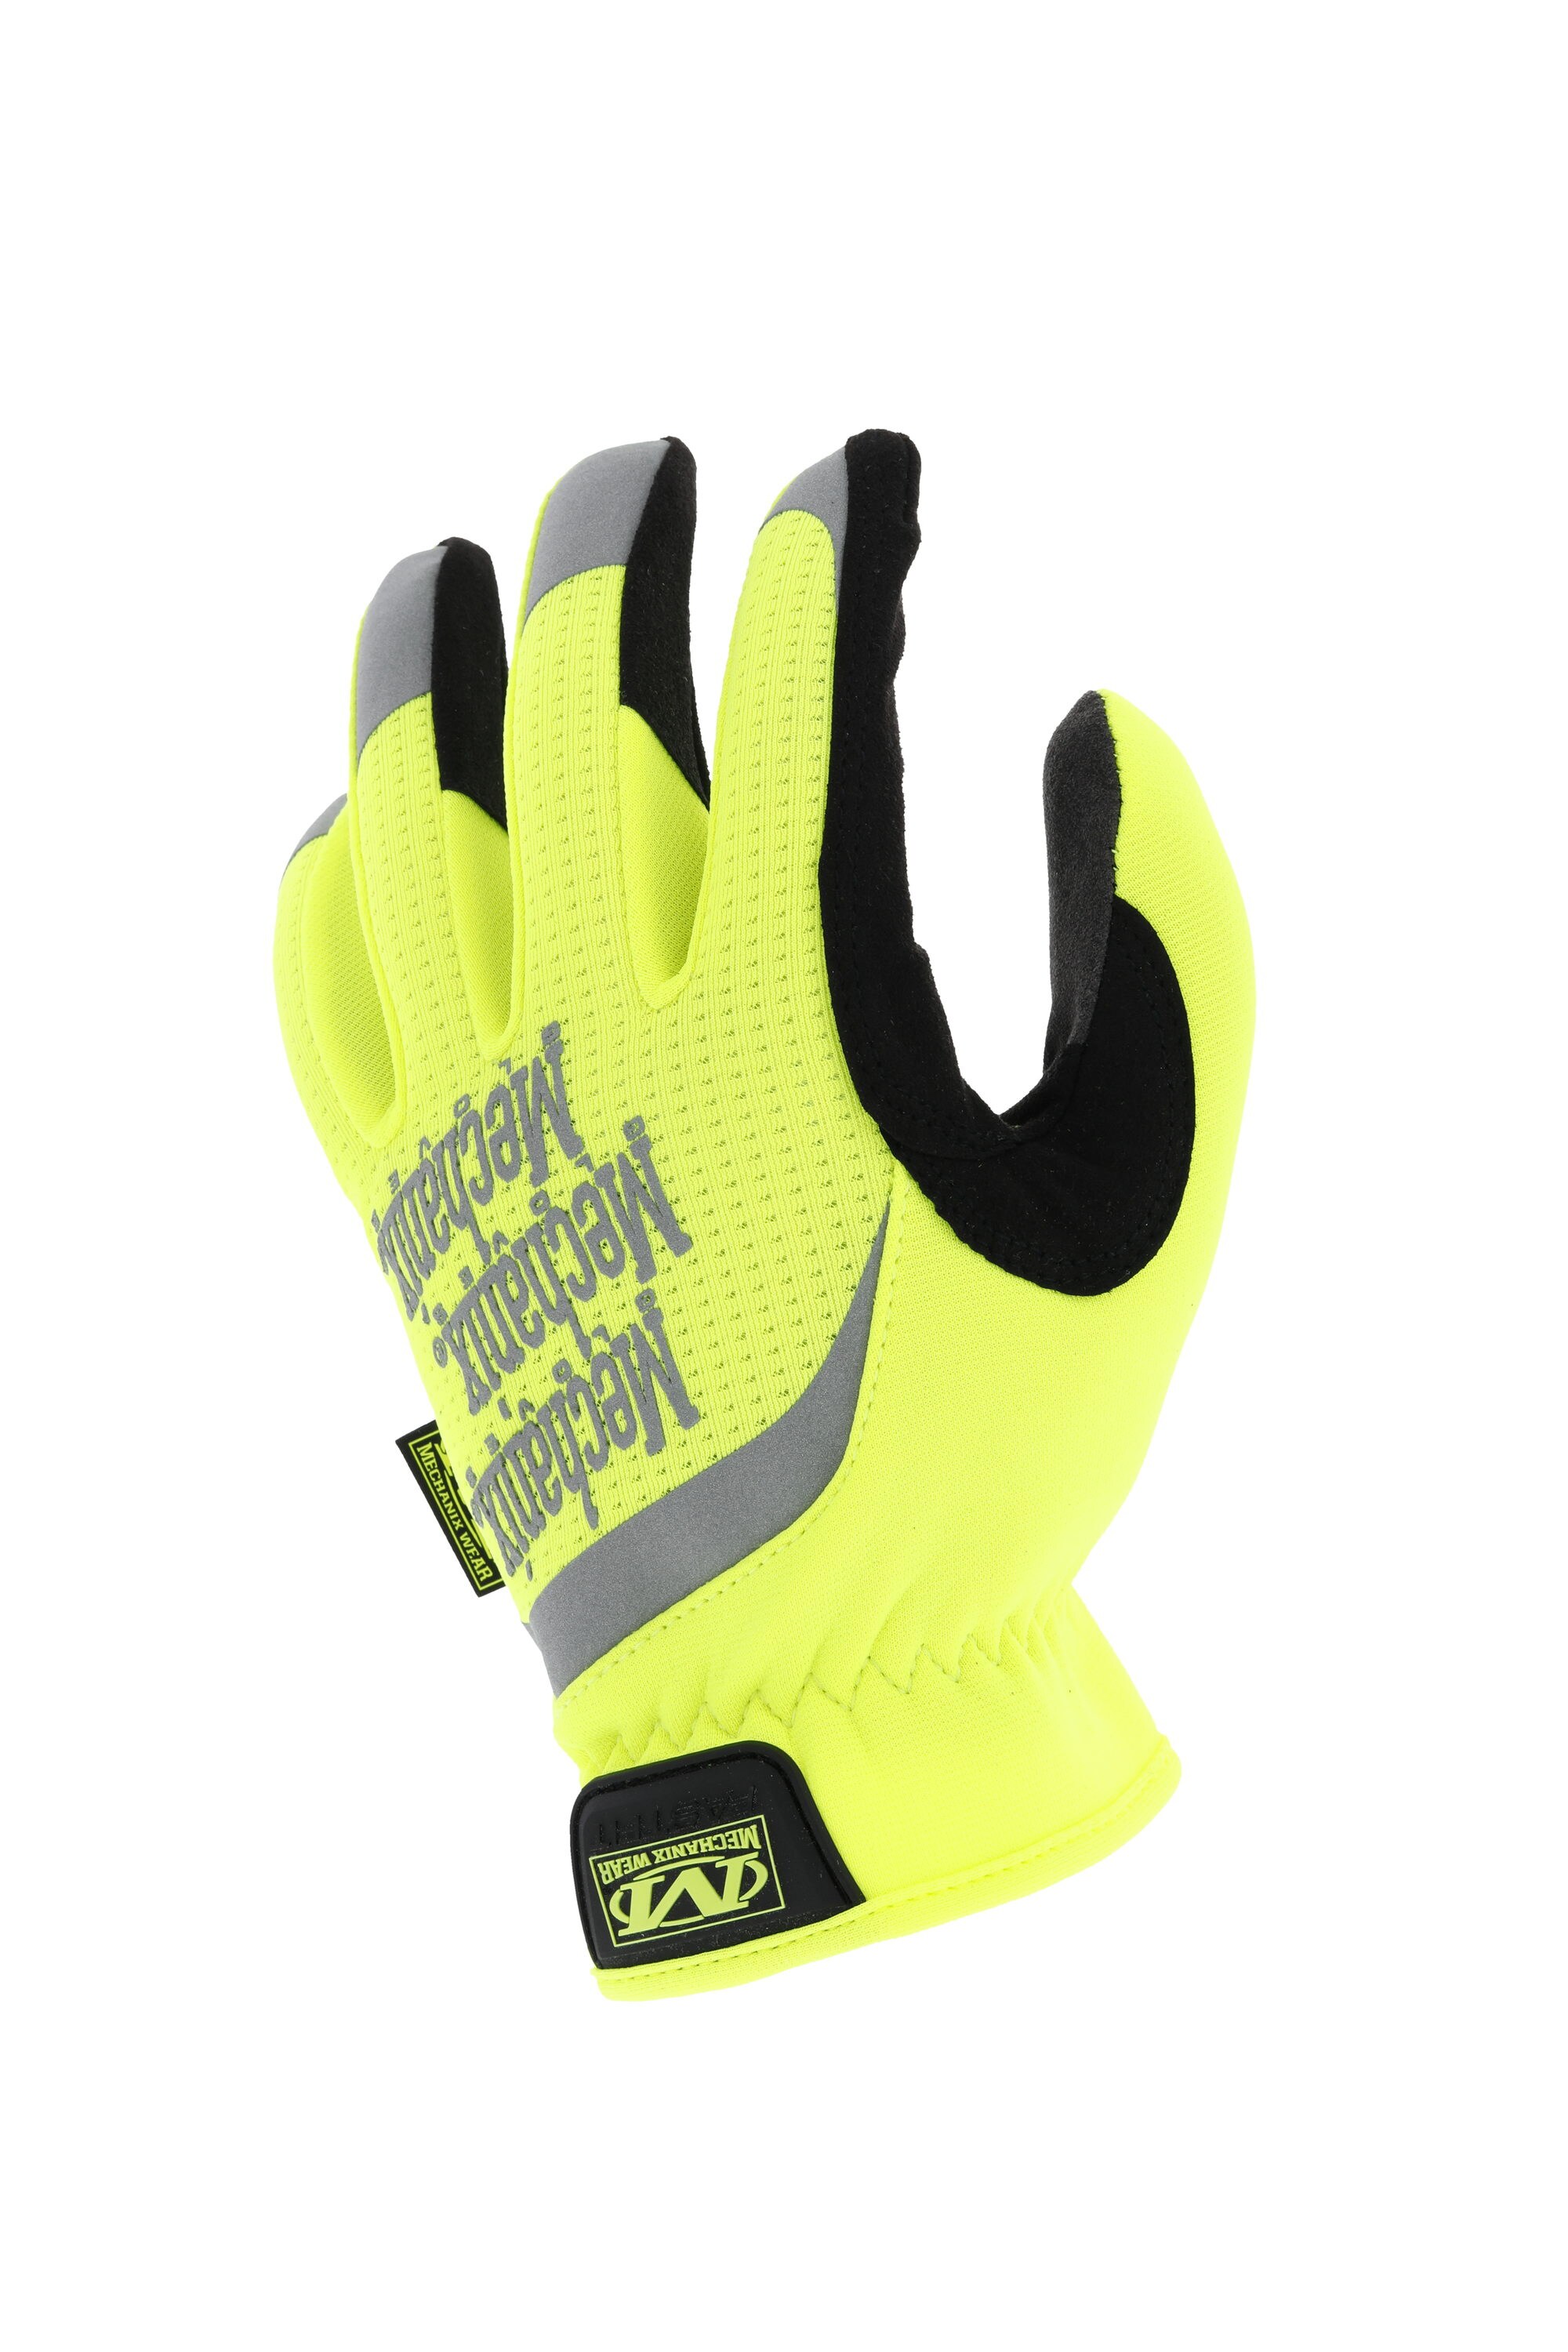 12 Pair Polyco Matrix NBR 125  Work Handling  Gloves Size 8 Medium 